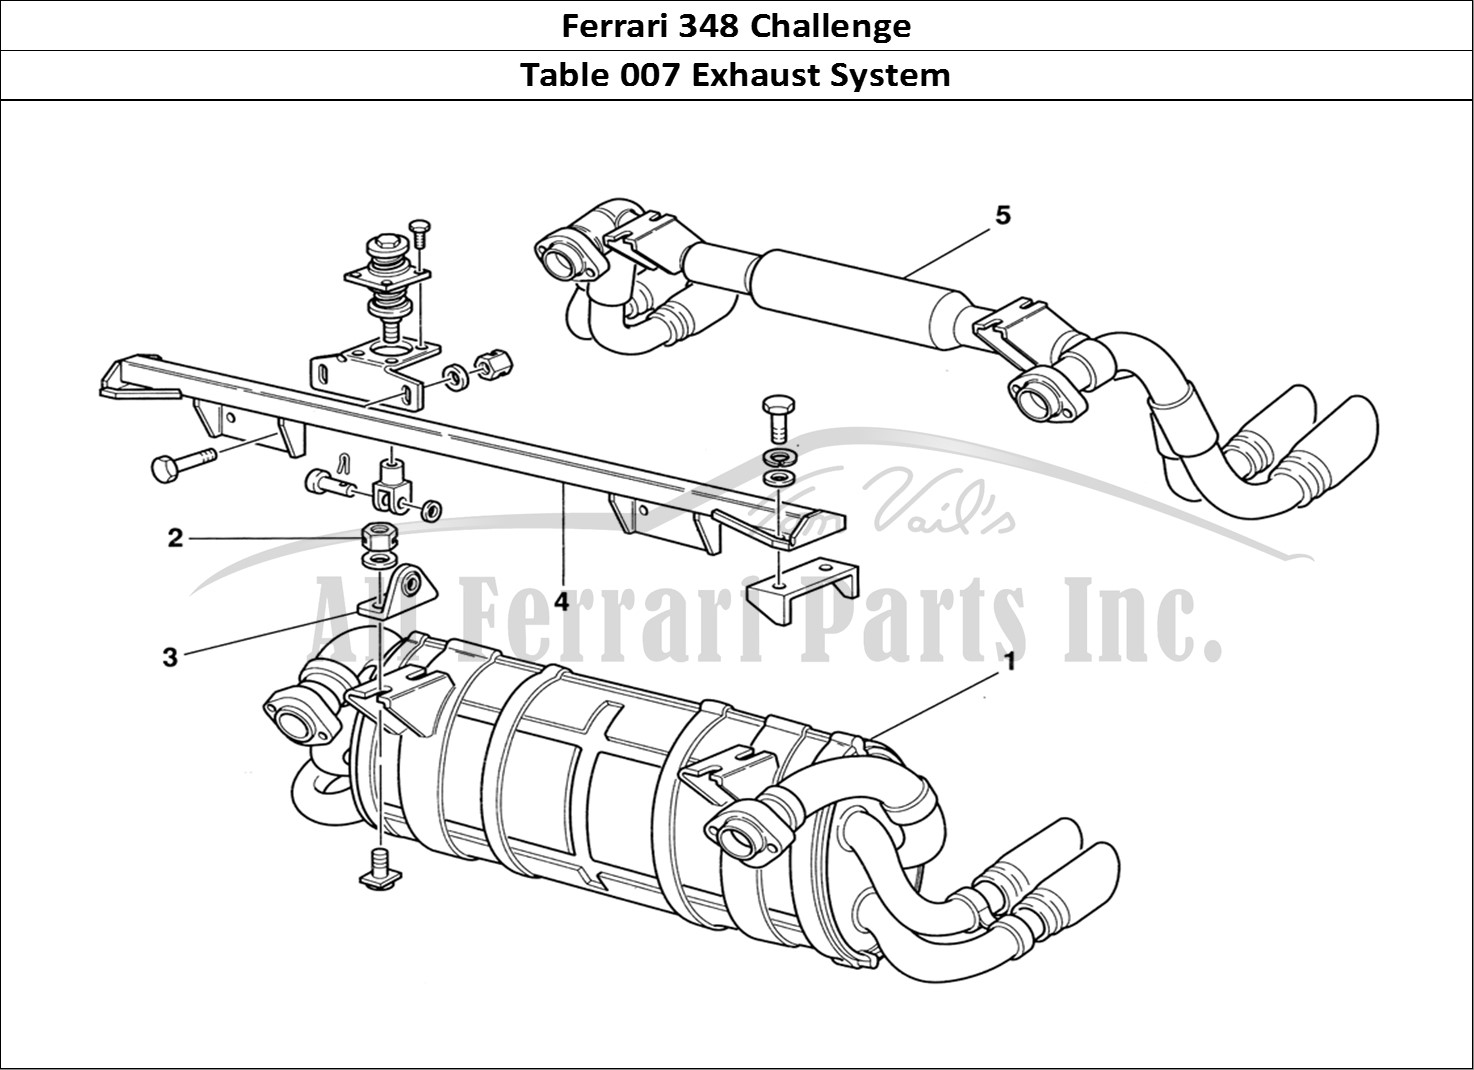 Ferrari Parts Ferrari 348 Challenge (1995) Page 007 Exhaust System